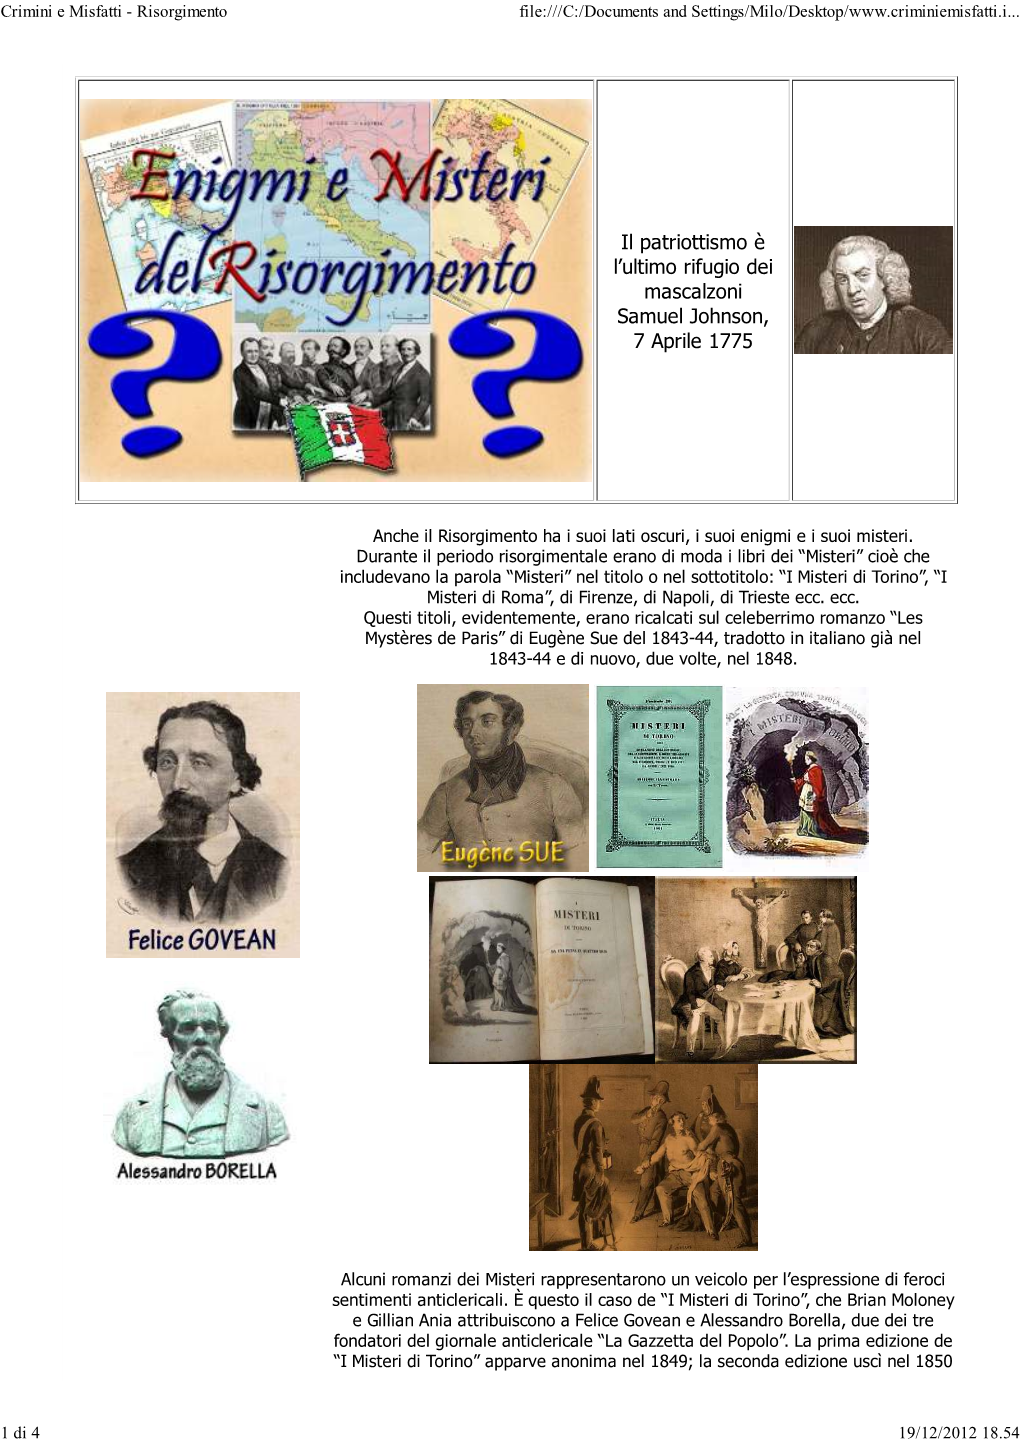 Crimini E Misfatti - Risorgimento File:///C:/Documents and Settings/Milo/Desktop